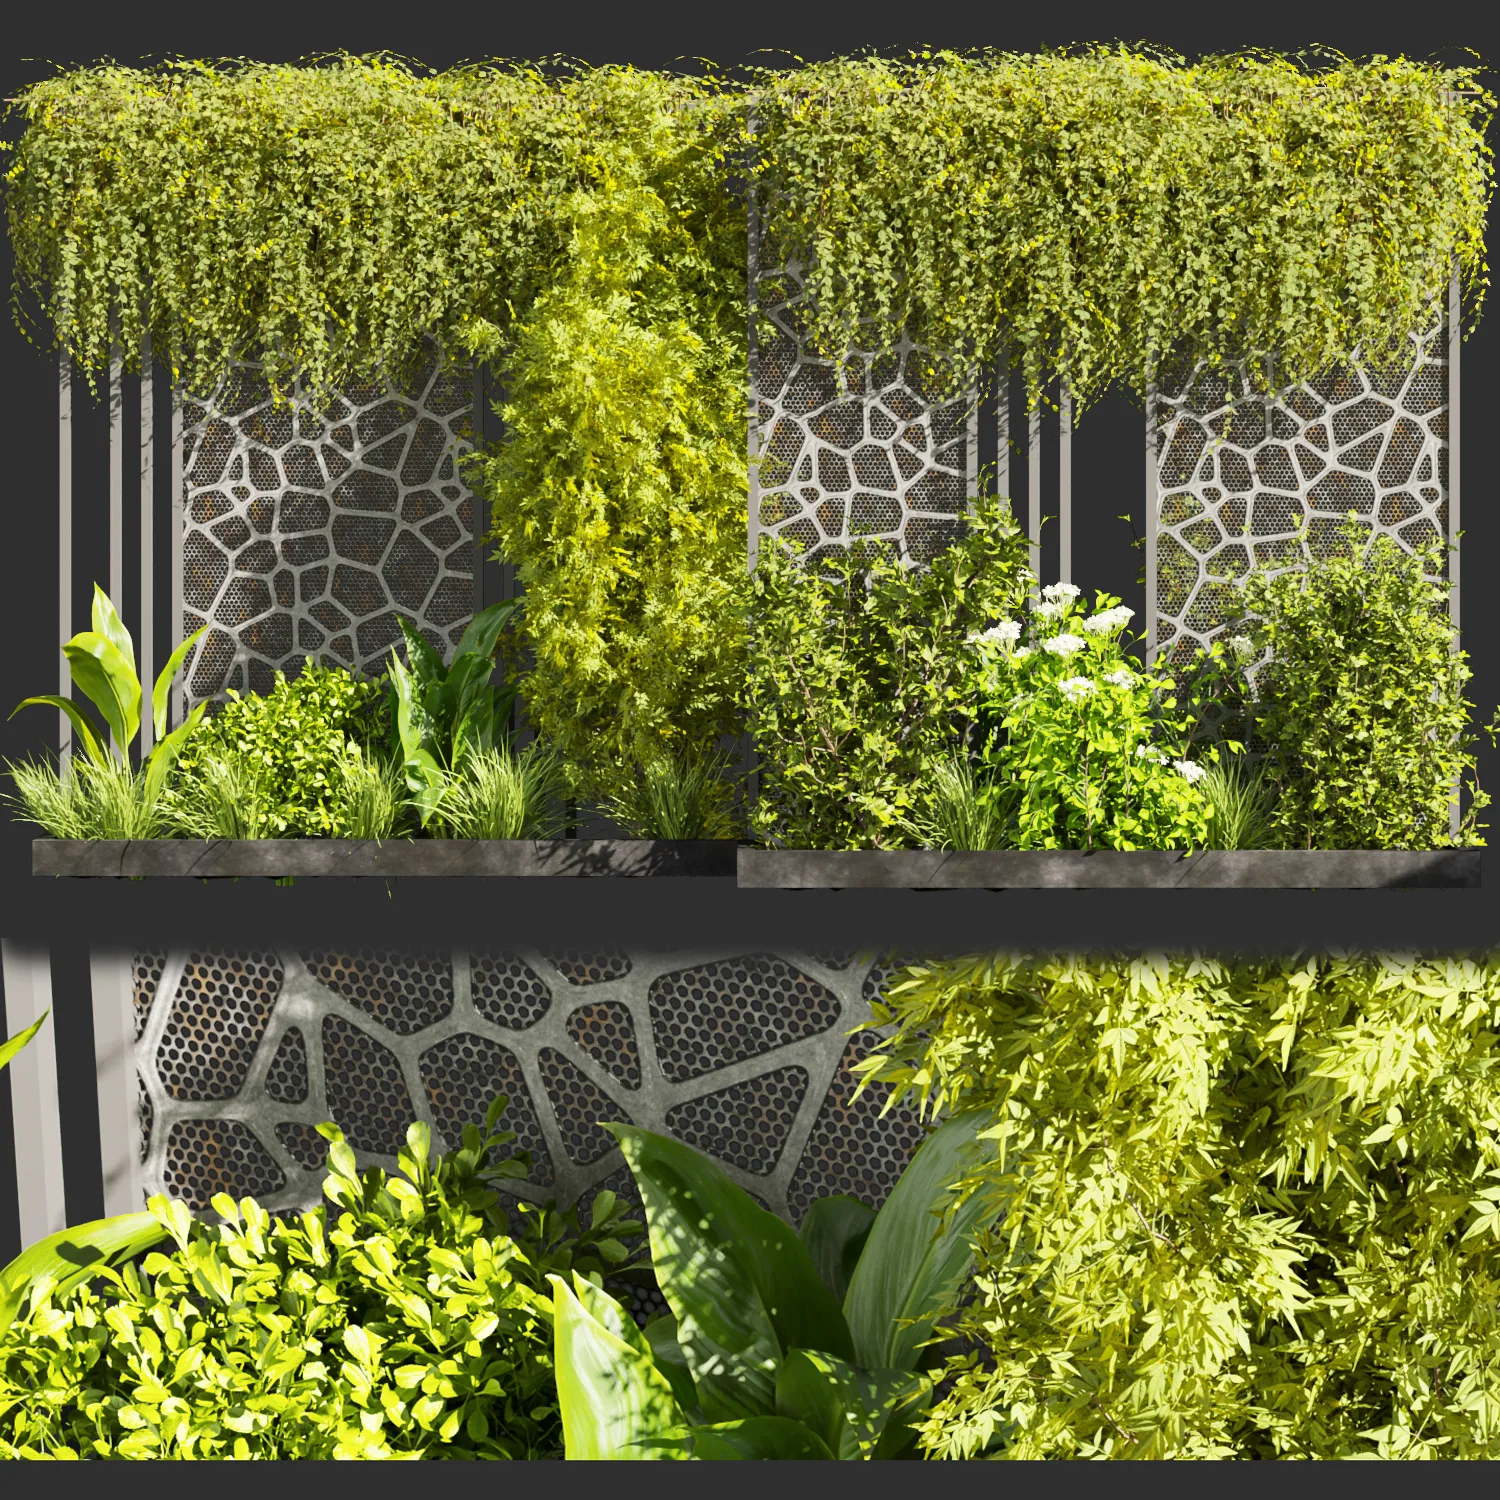 Collection plant vol 379 - Urban environment - wall yard - leaf - bush - ivy - blender - 3dmax - cinema 4d